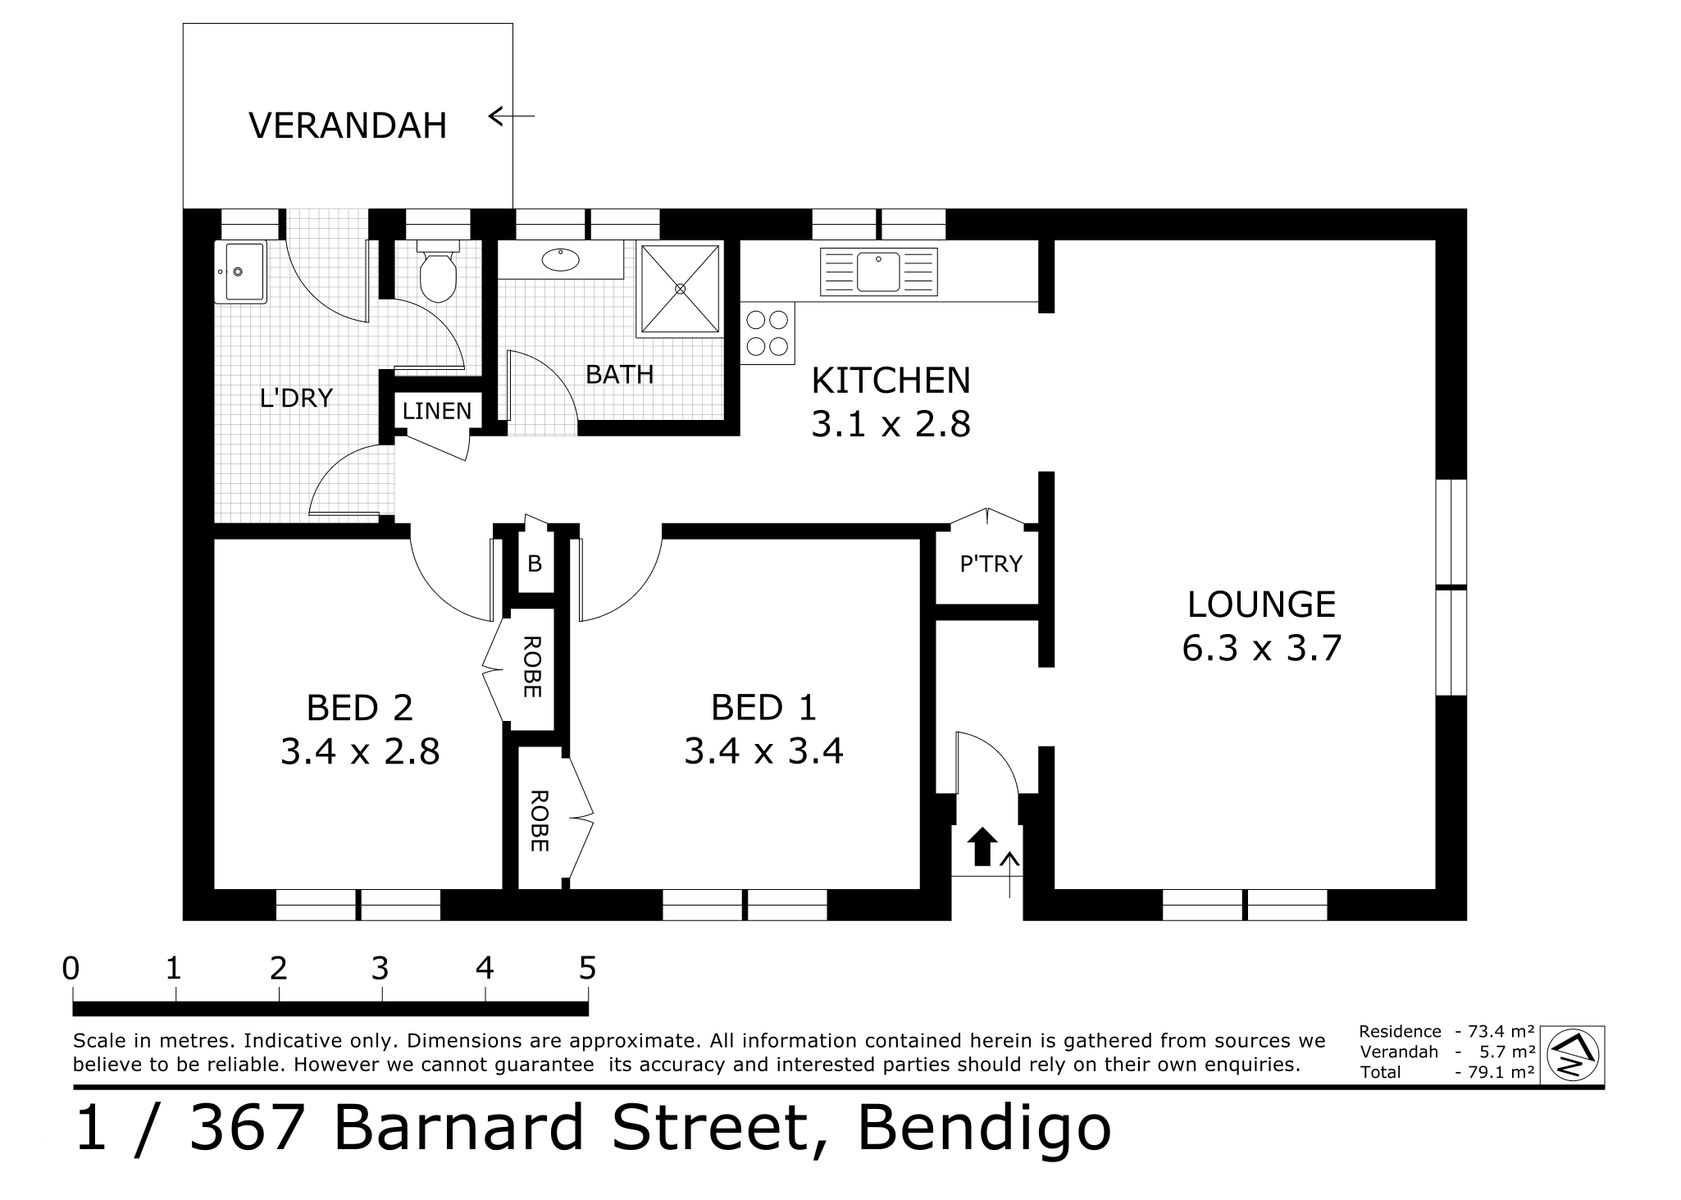 printsize 1 367 Barnard Street Bendigo Highres